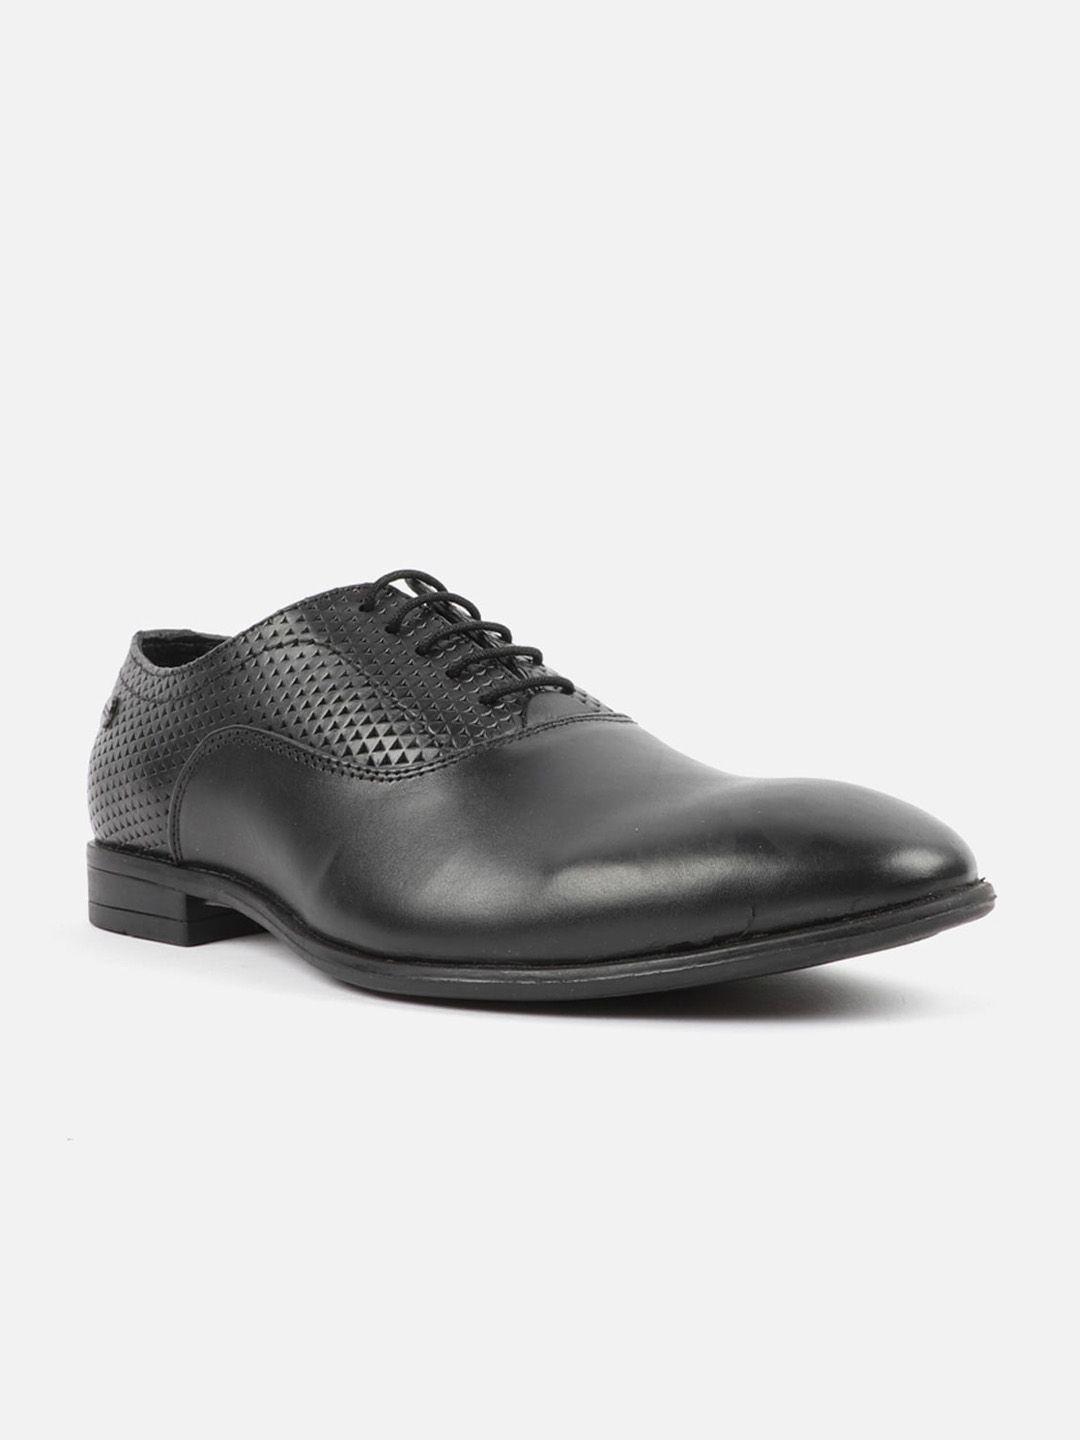 carlton-london-men-textured-leather-formal-oxfords